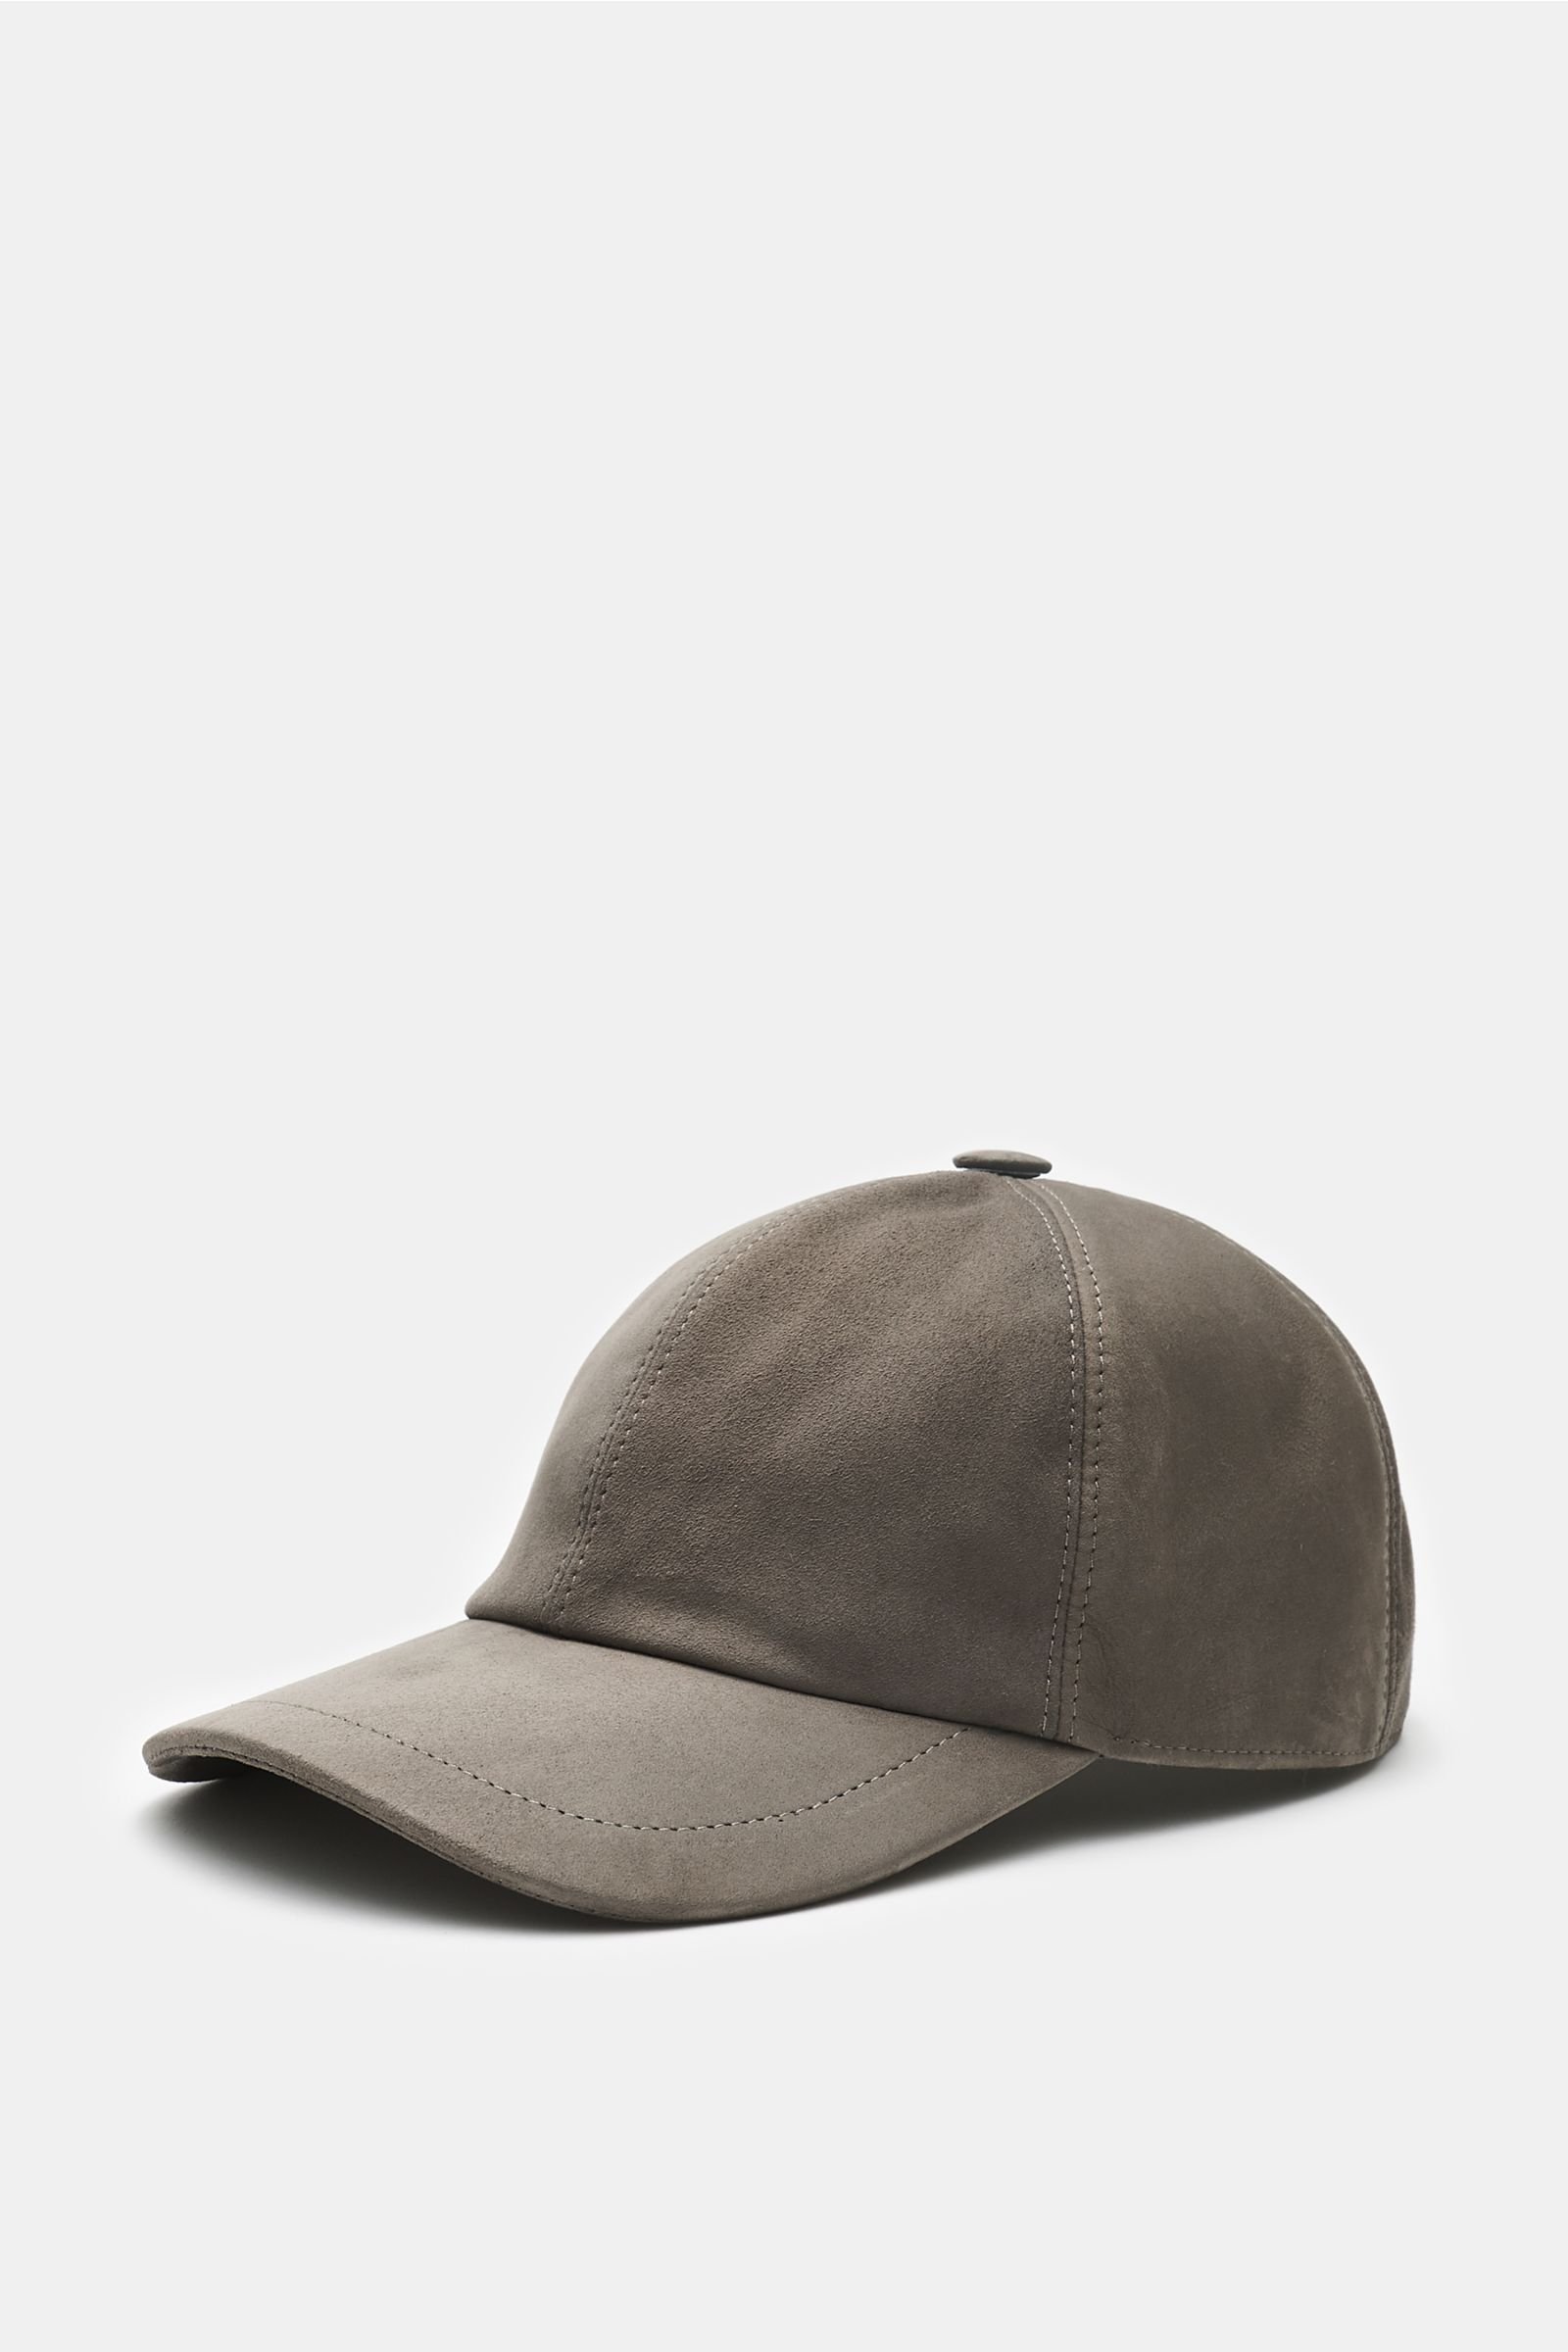 Suede baseball cap grey-brown